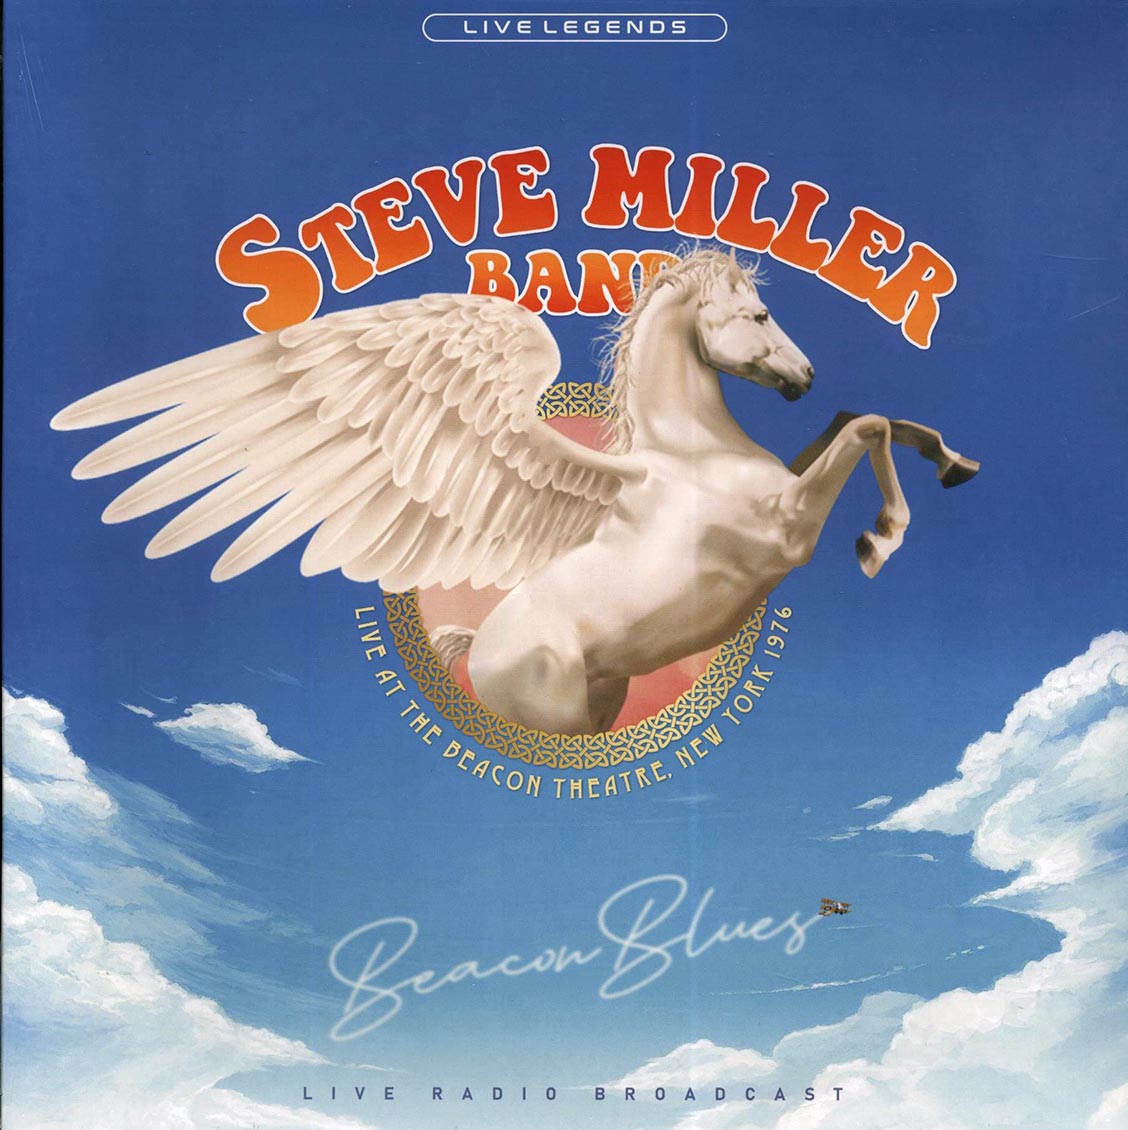 Steve Miller Band - Beacon Blues: Live Radio Broadcast, Beacon Theatre, NY, May 7th, 1976 (colored vinyl) - Vinyl LP